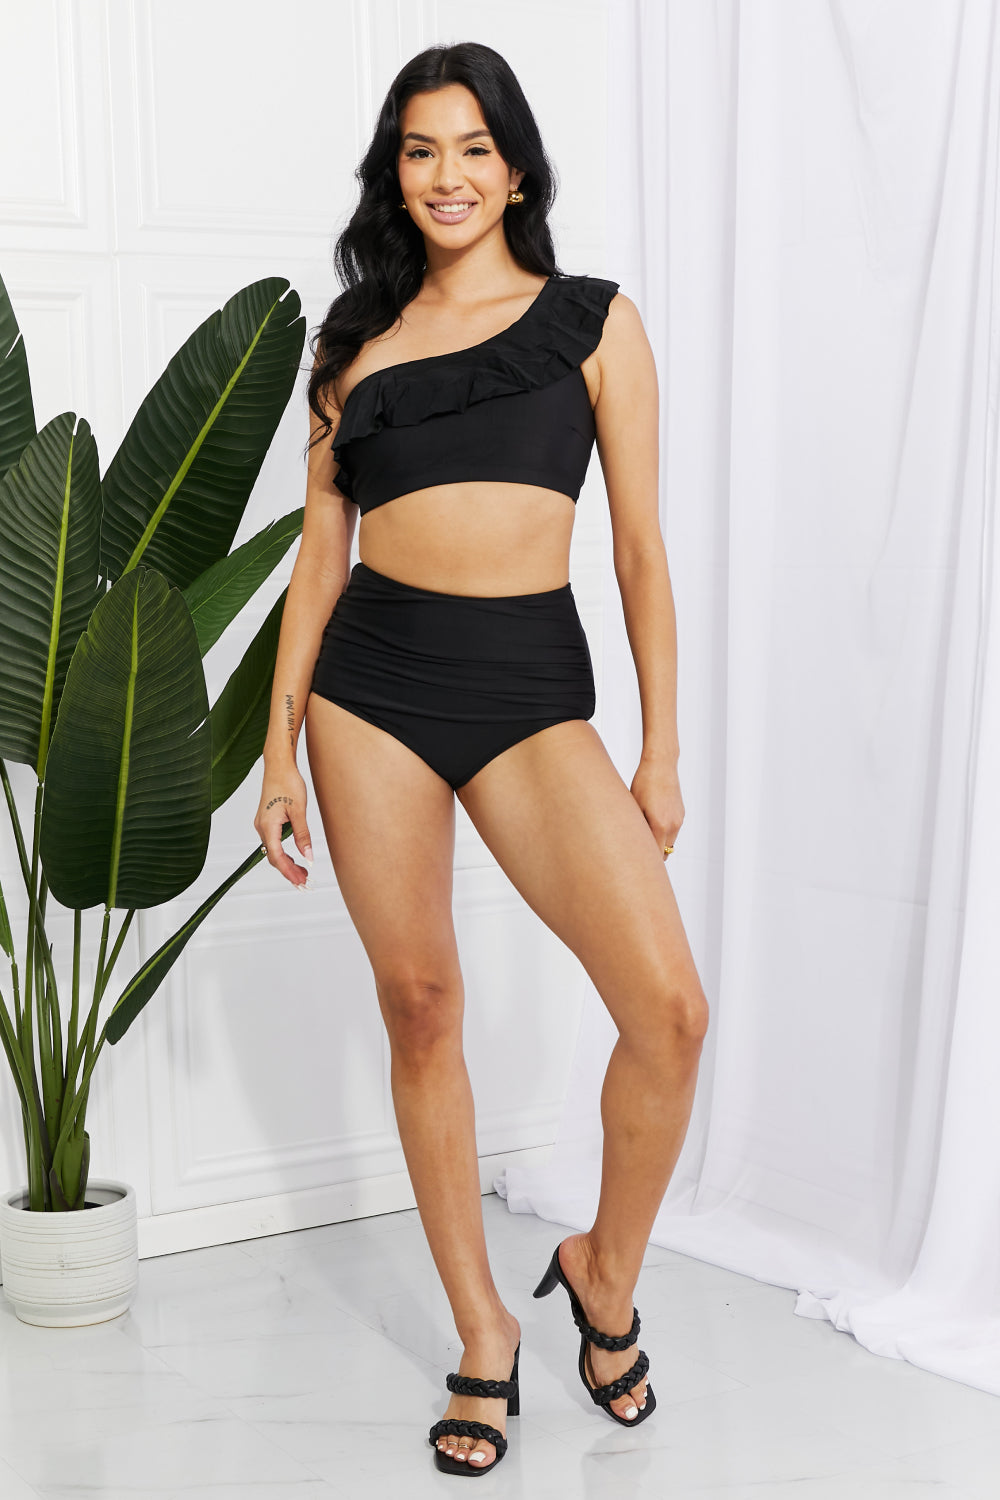 Marina West Swim Seaside Romance Ruffle One-Shoulder Bikini in Black - Cheeky Chic Boutique